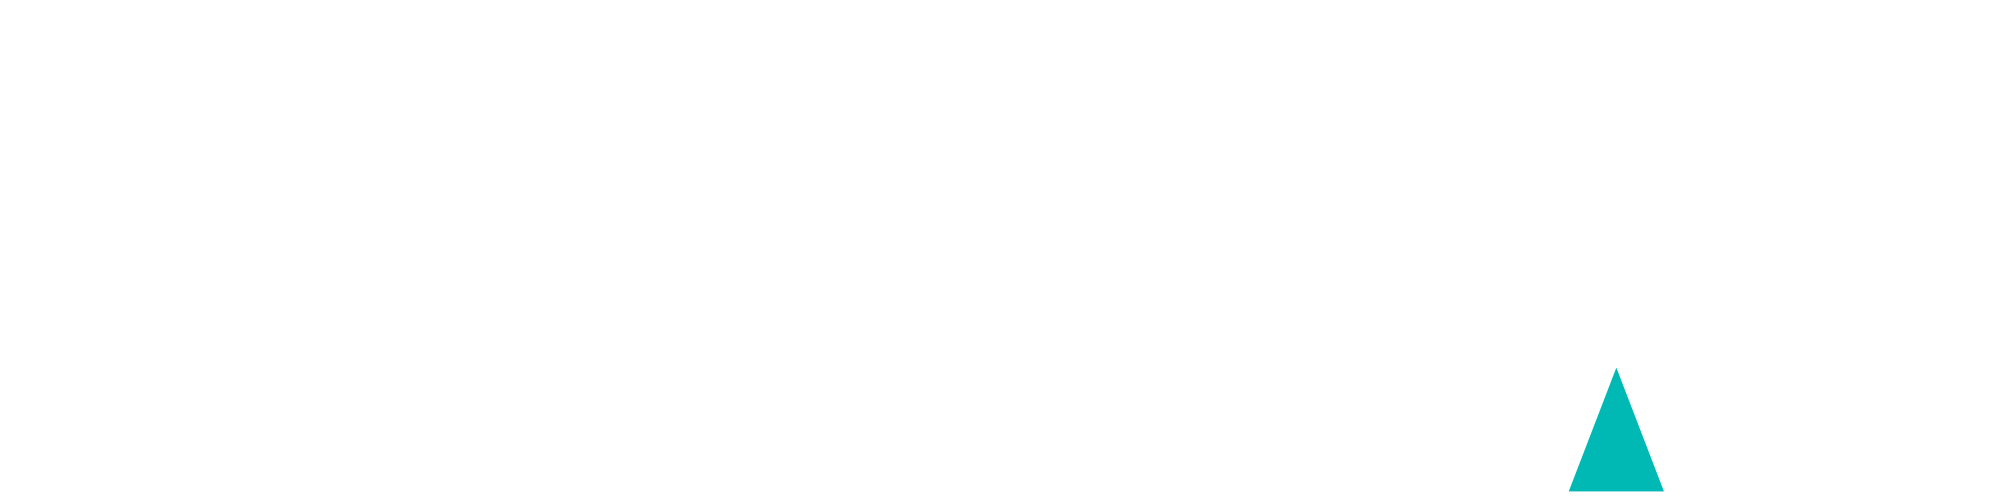 Spence Accounting Logo